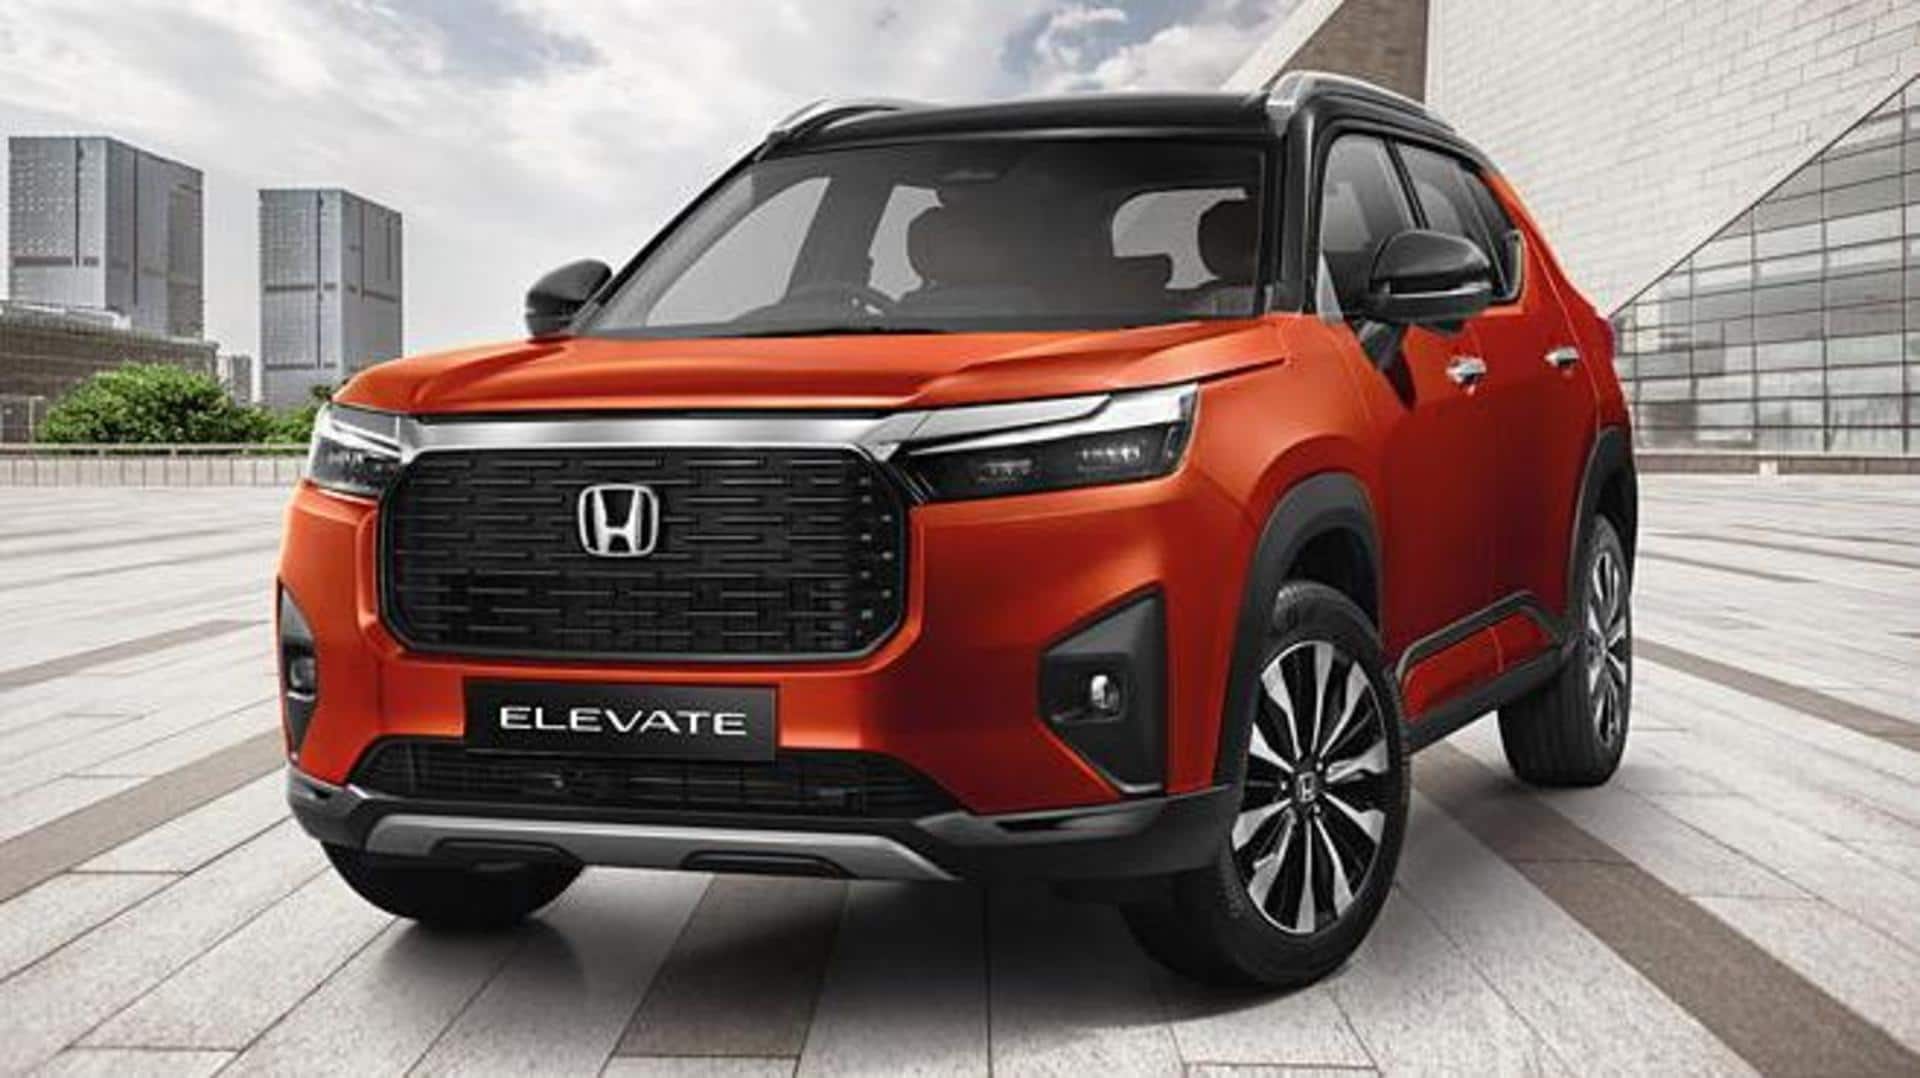 Honda Elevate will deliver fuel efficiency between 15.3-16.9km/l